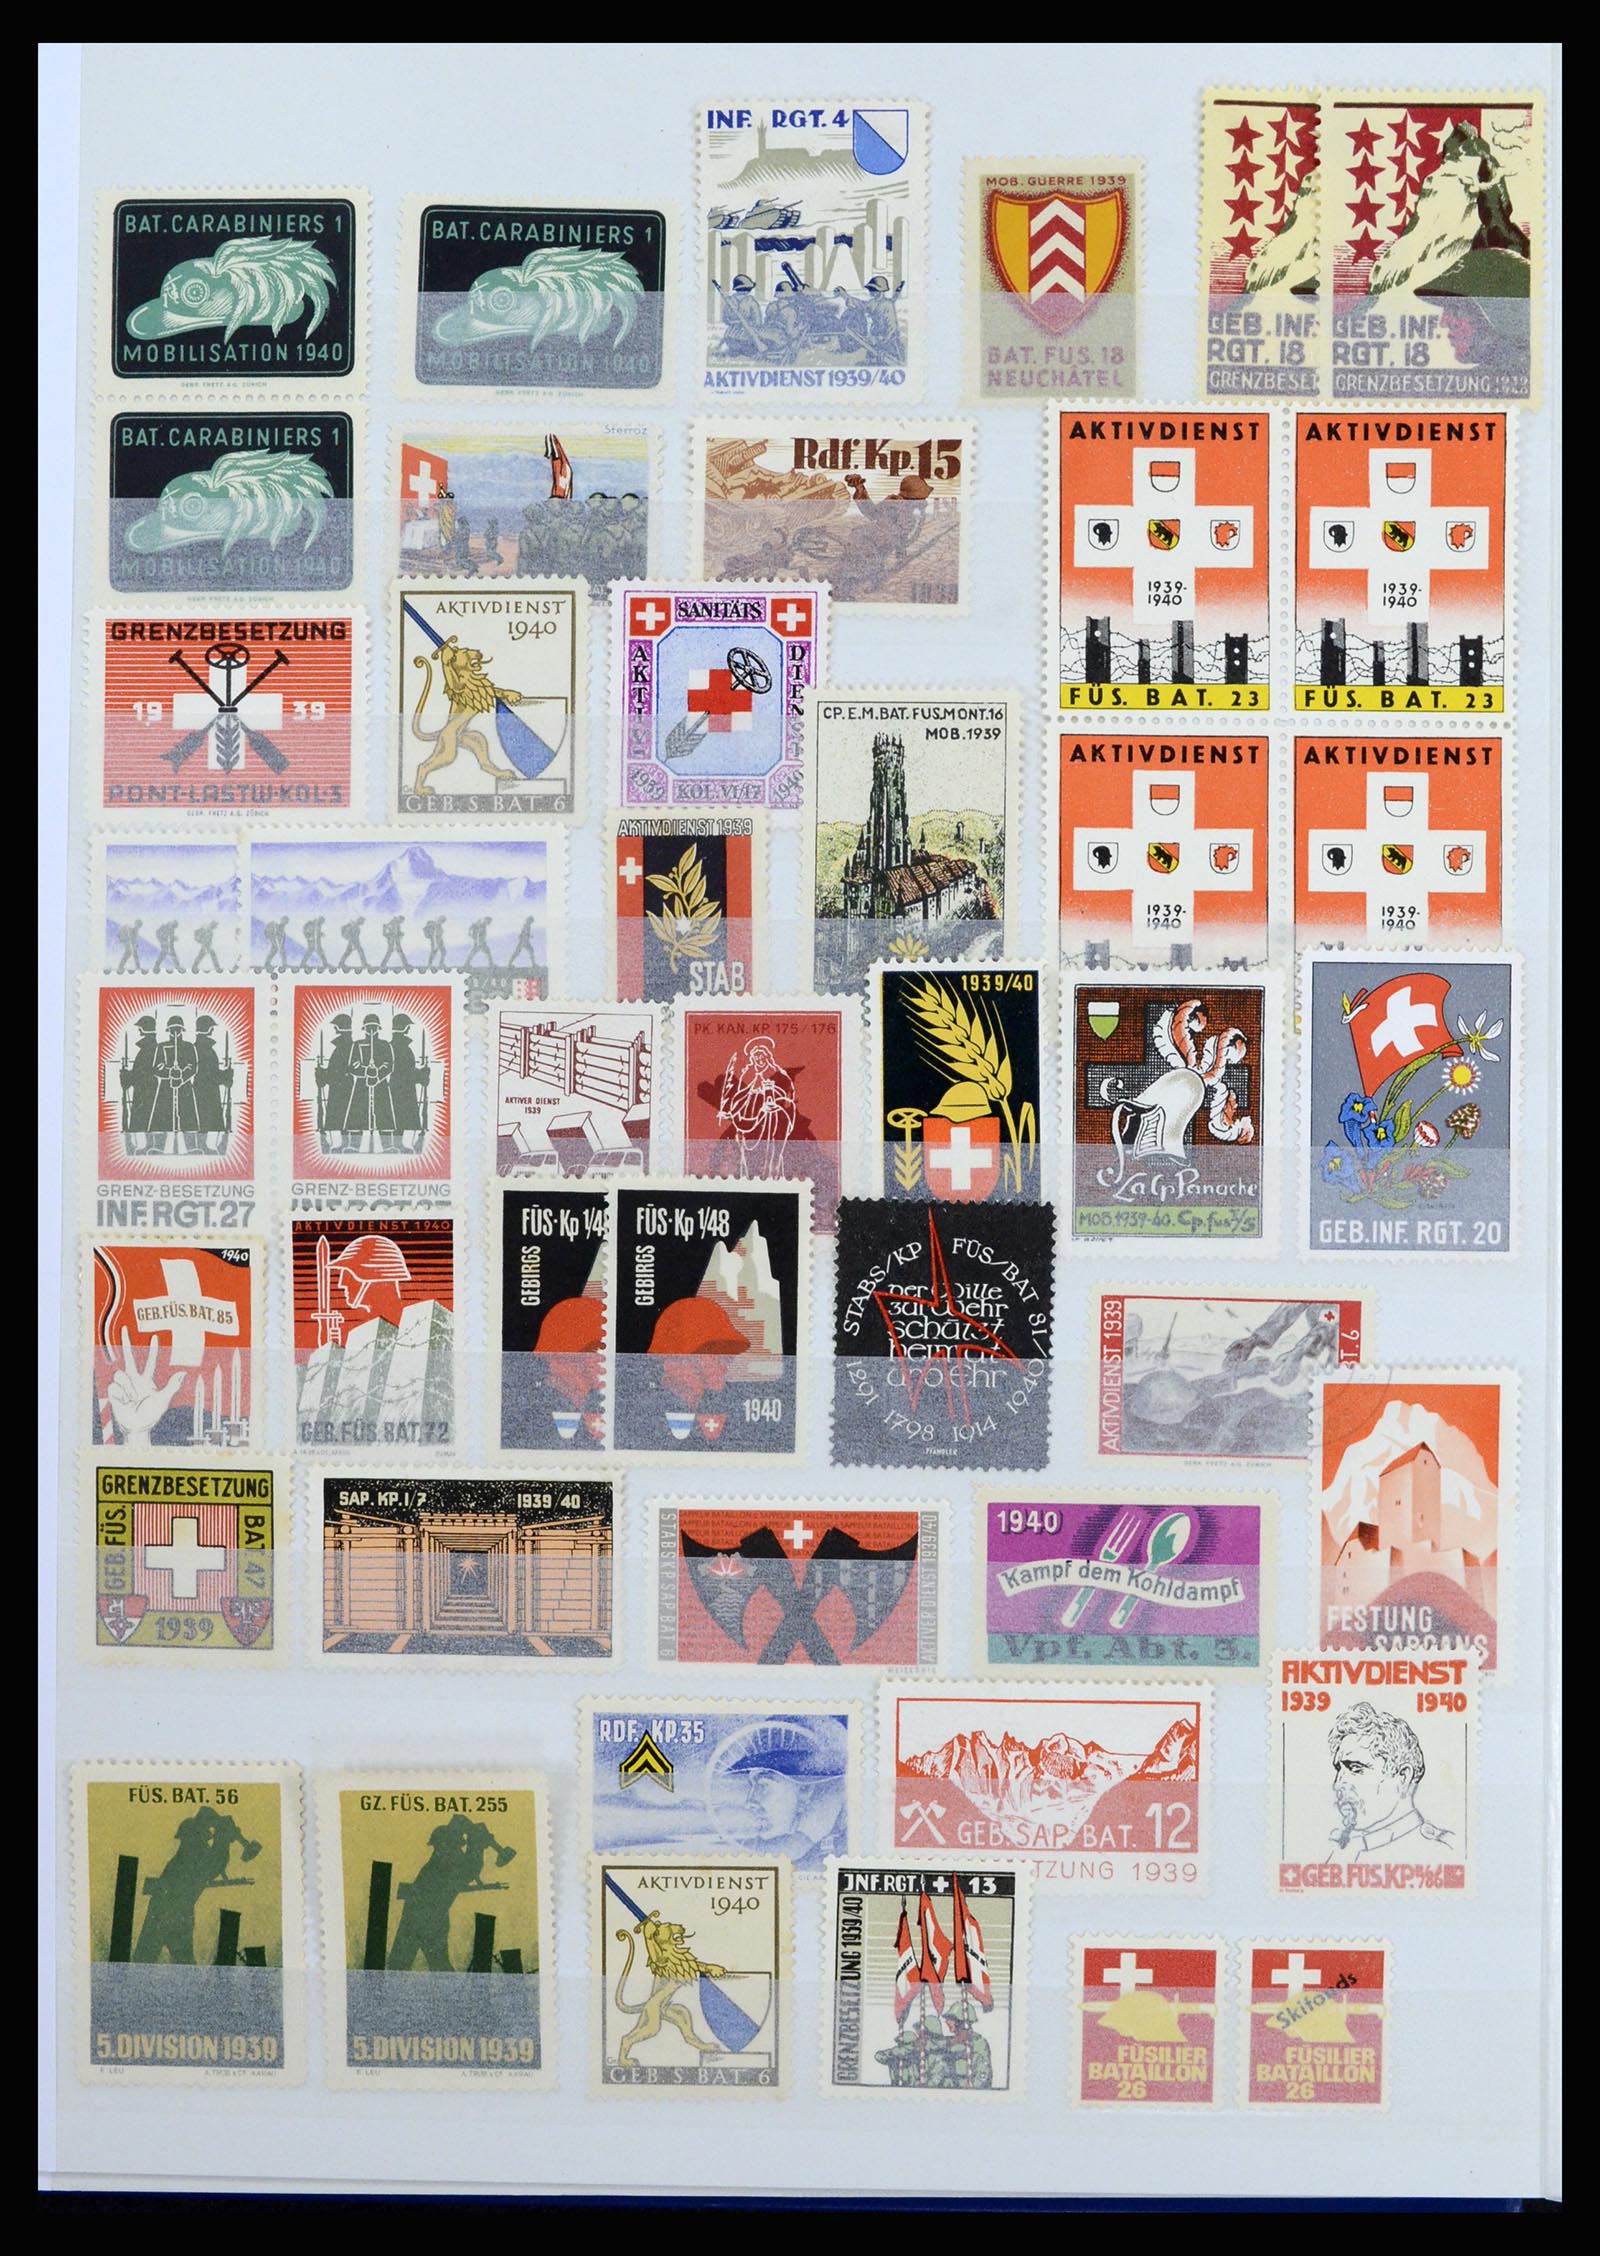 37149 008 - Stamp collection 37149 Switzerland soldier stamps 1914-1945.